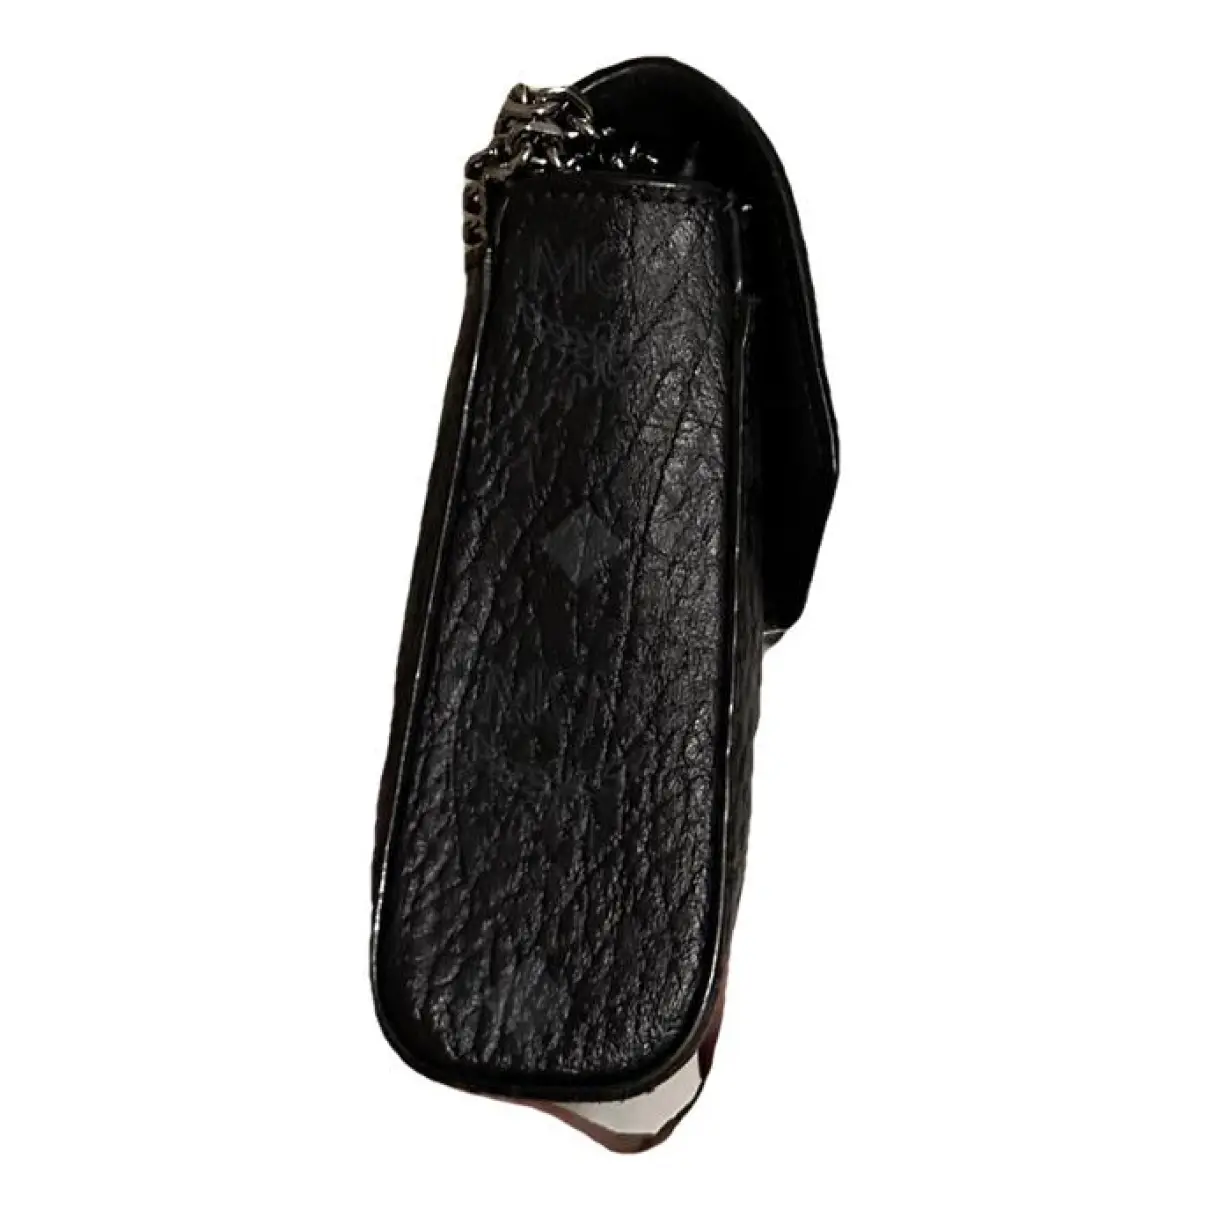 Buy MCM Millie leather clutch bag online